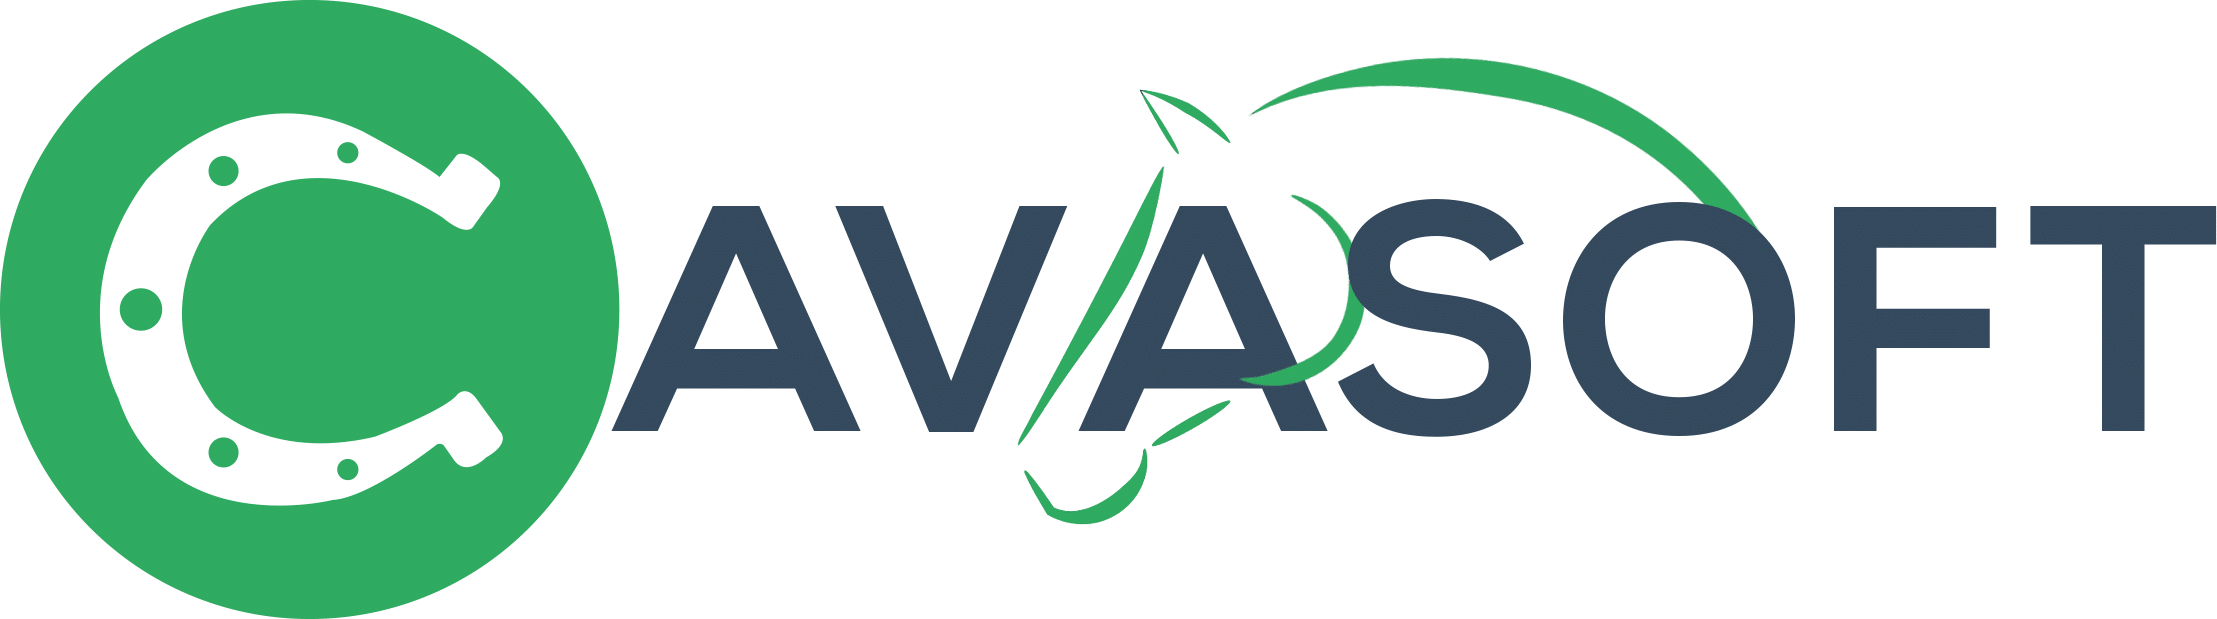 Logo cavasoft